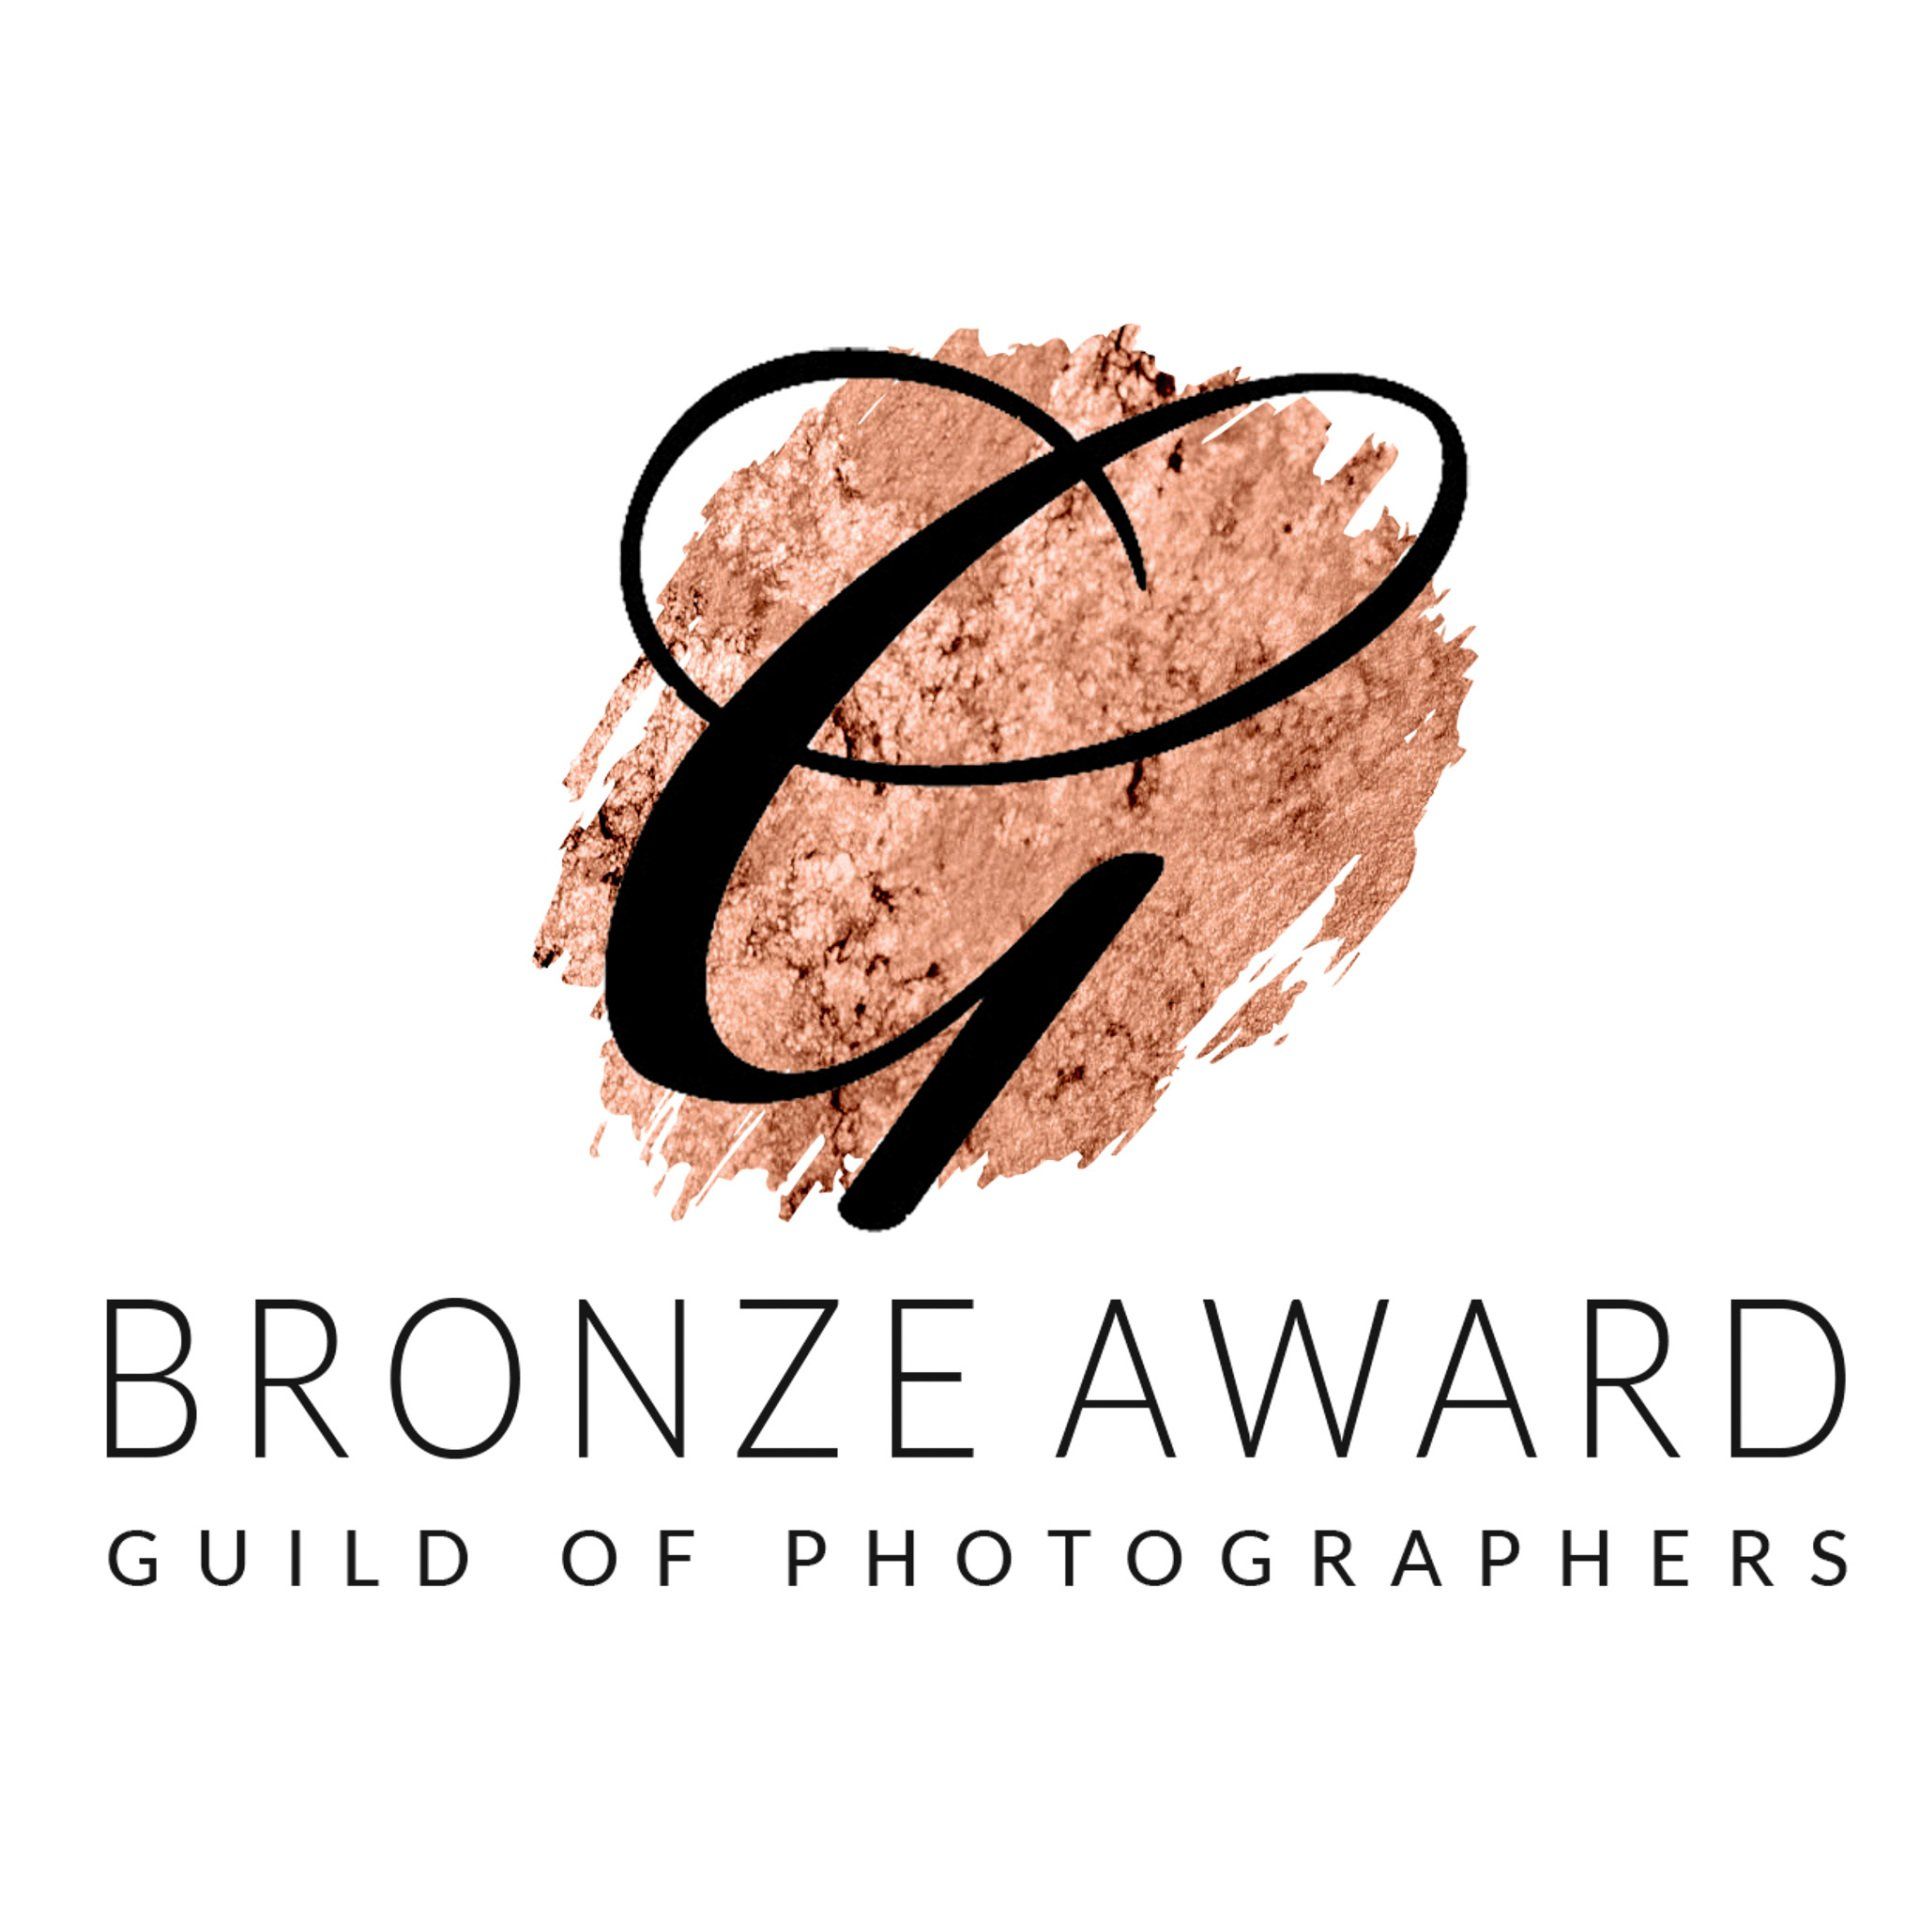 Award Winning Photographer